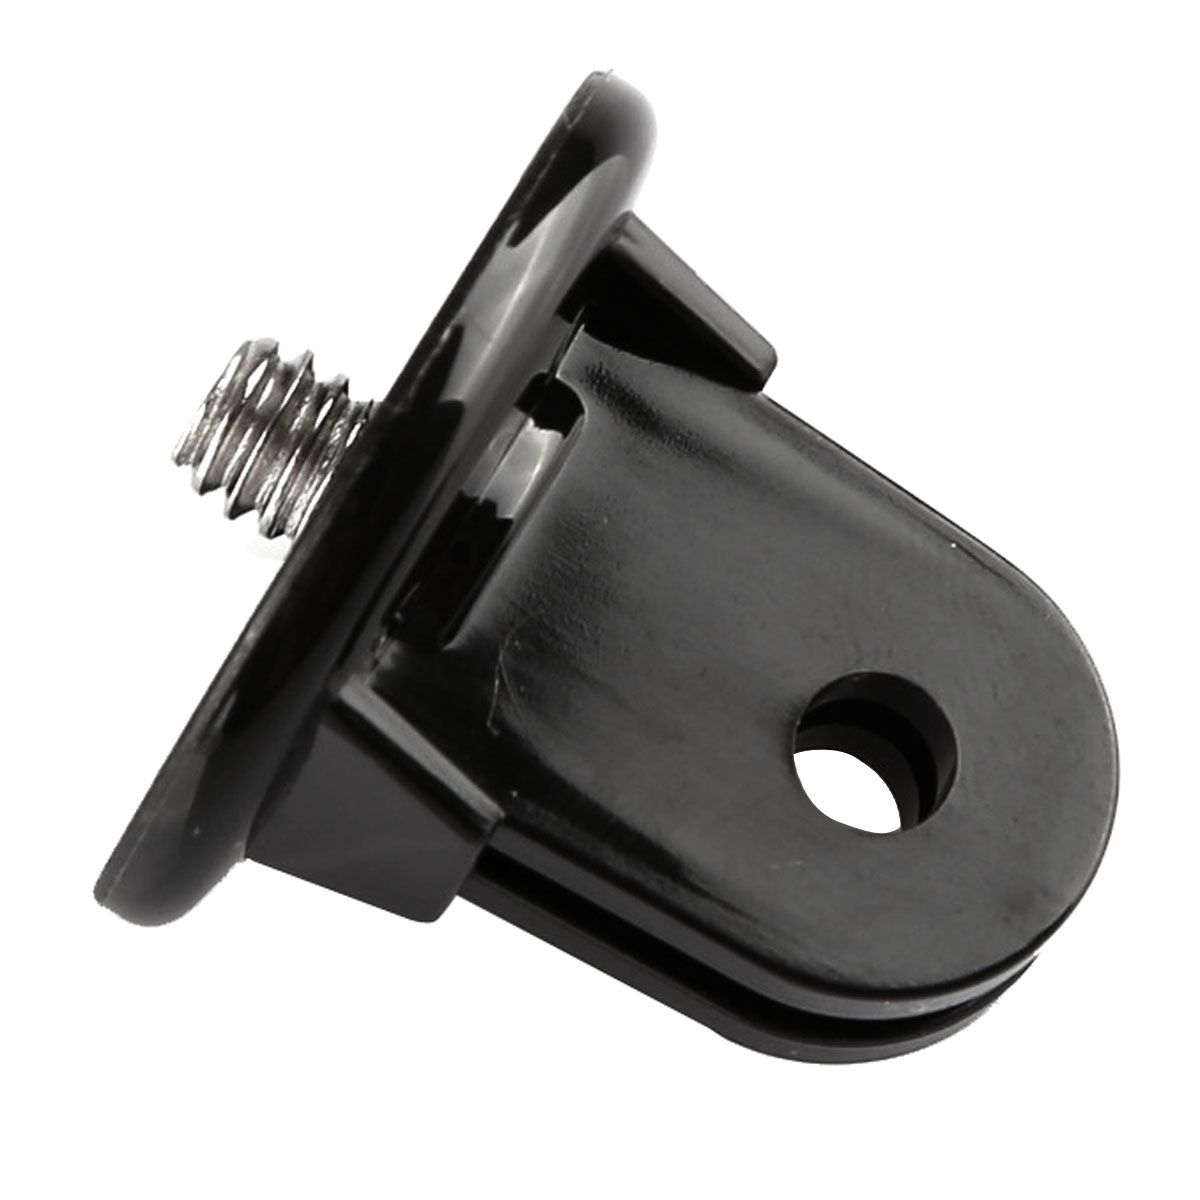 Quarter screw adapter: DZ-301